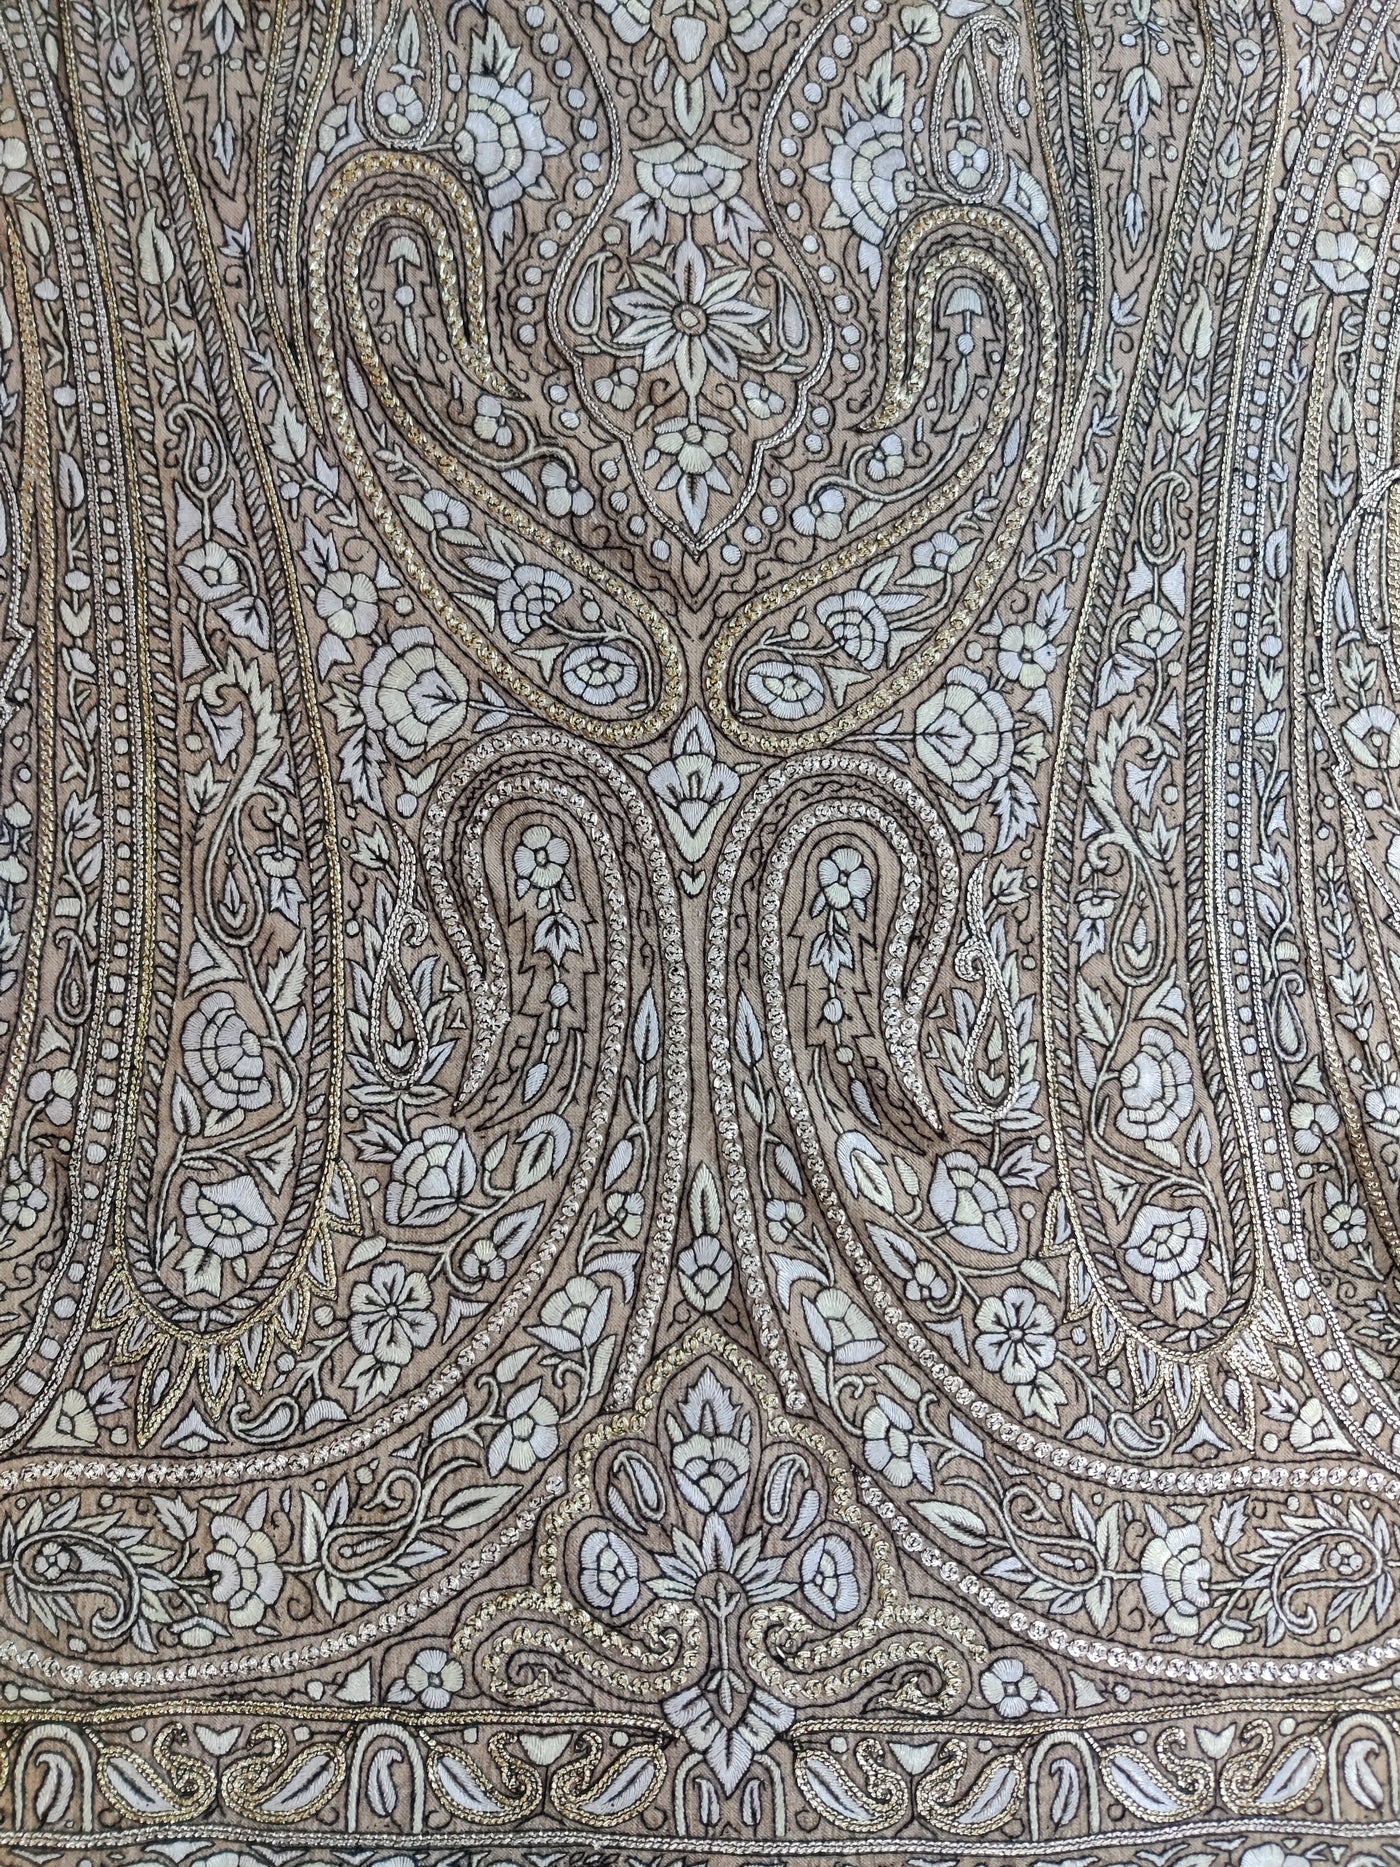 Big 275 cm (108") x 140 cm (55") Pure Pashmina Jamawar Shawl with combination of Hand-Tilla & Sozni Embroidery